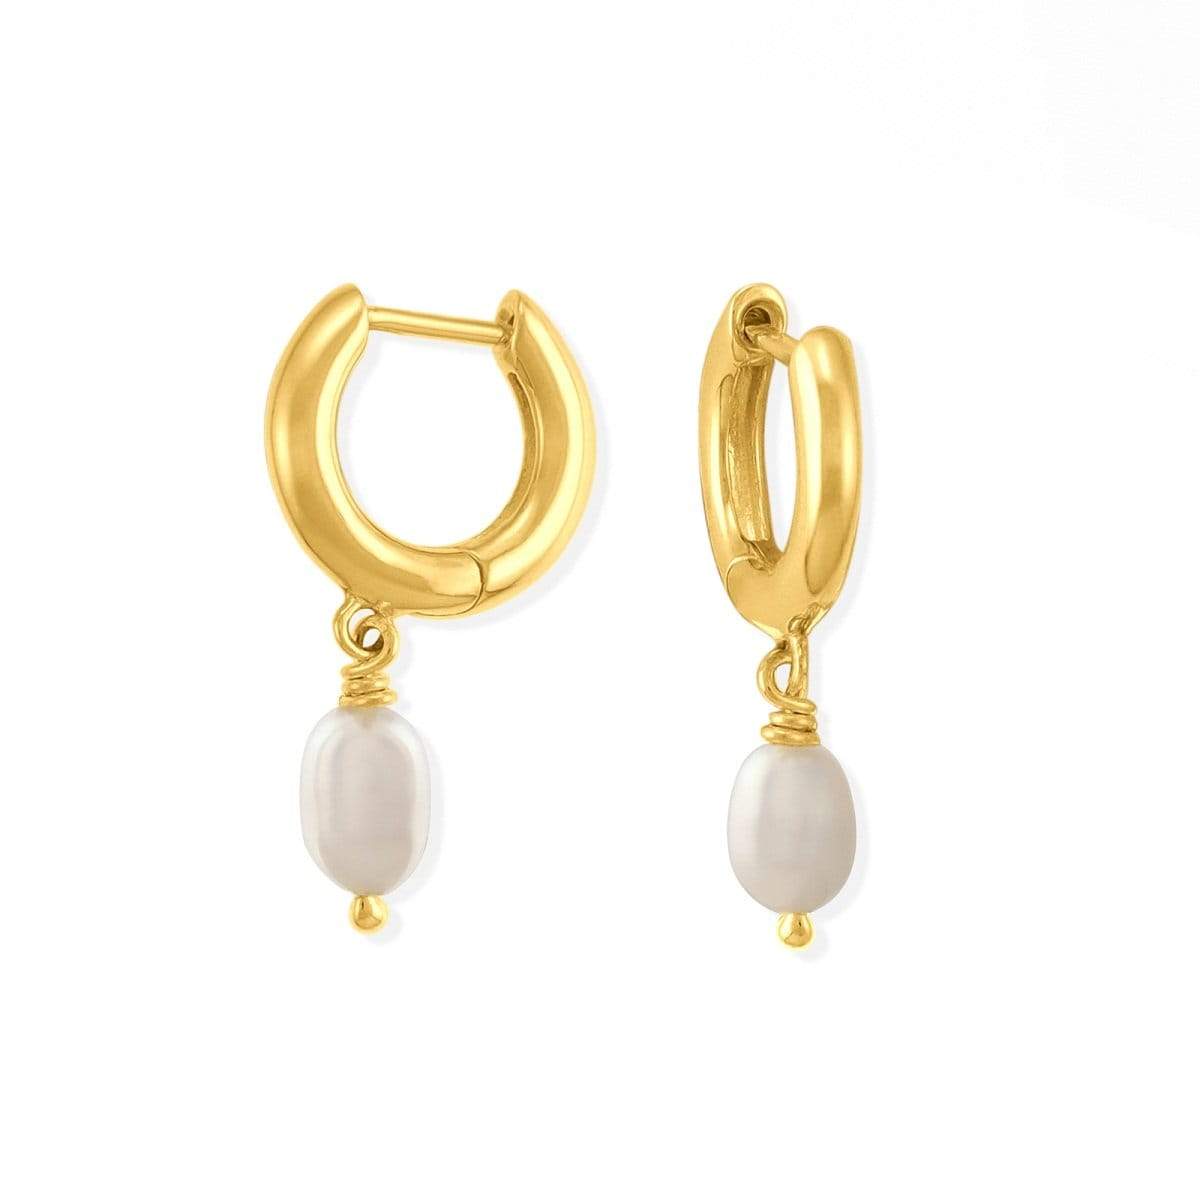 Boma Jewelry Earrings 14K Gold Plated Pearl Huggies